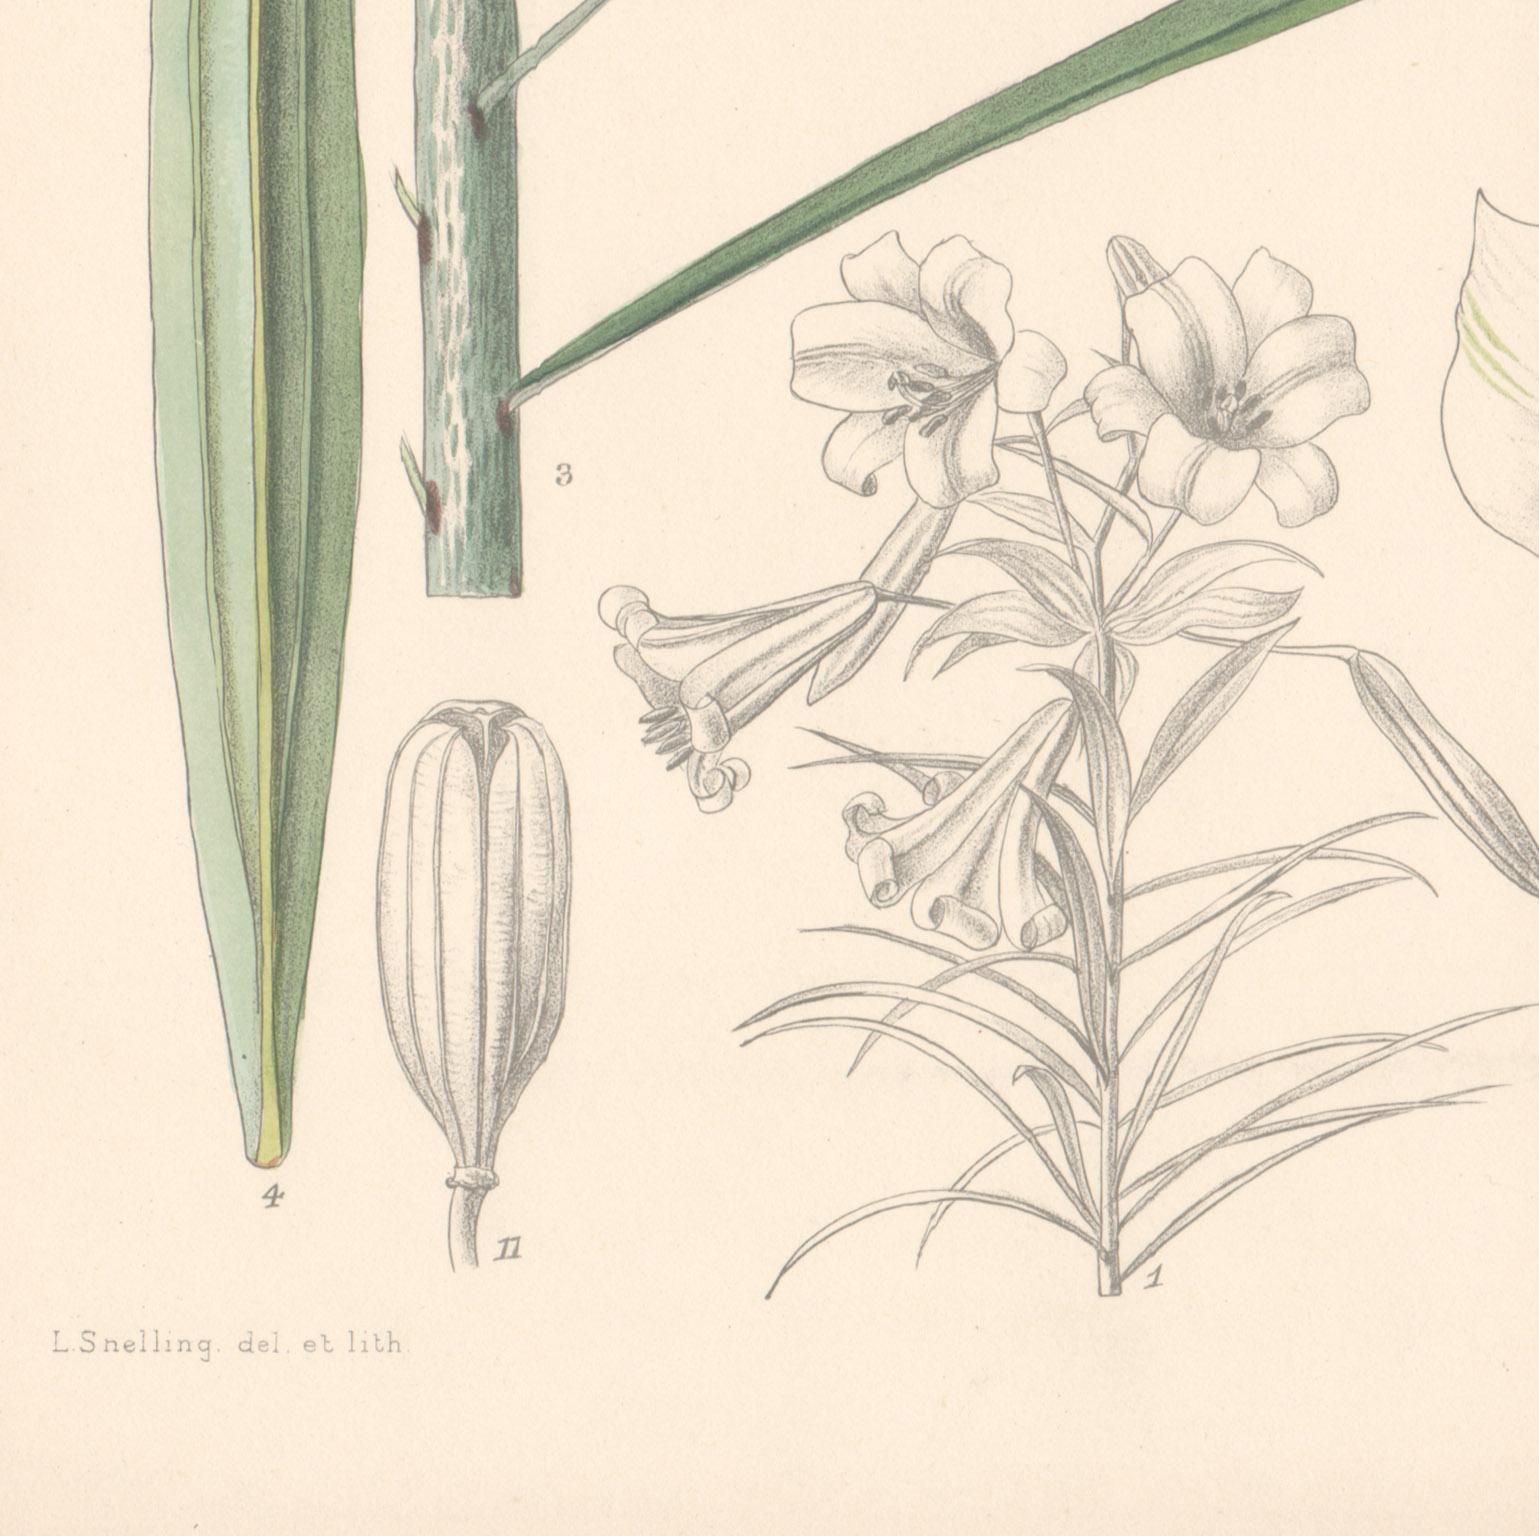 Lilium Centifolium (China) (Lily), Lillian Snelling botanical lithograph with original hand-colouring, 1924. From Curtis' Botanical Magazine.

Lillian Snelling was 